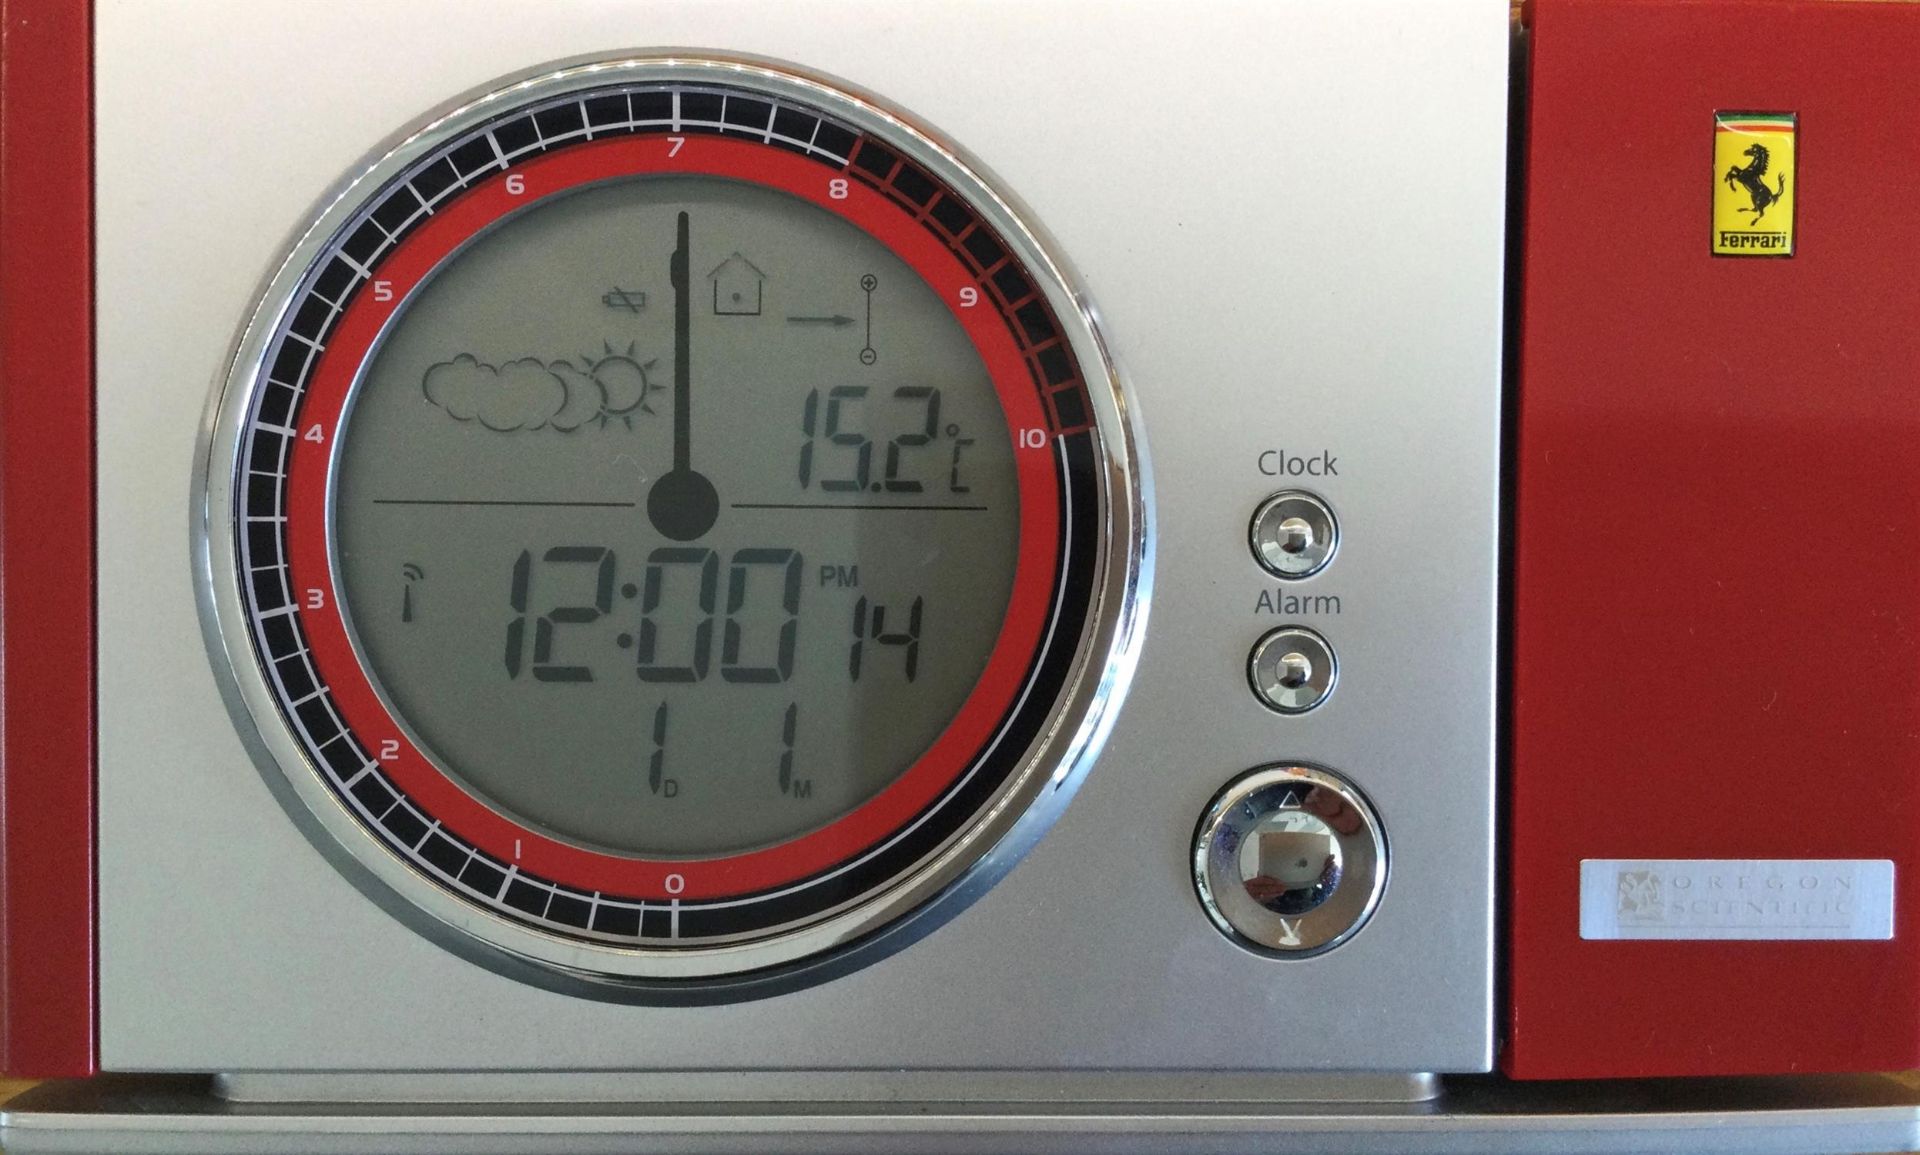 A Rare Maranello Ferrari-Badged Radio Controlled Projection Alarm Clock with Weather Forecast - Image 3 of 5